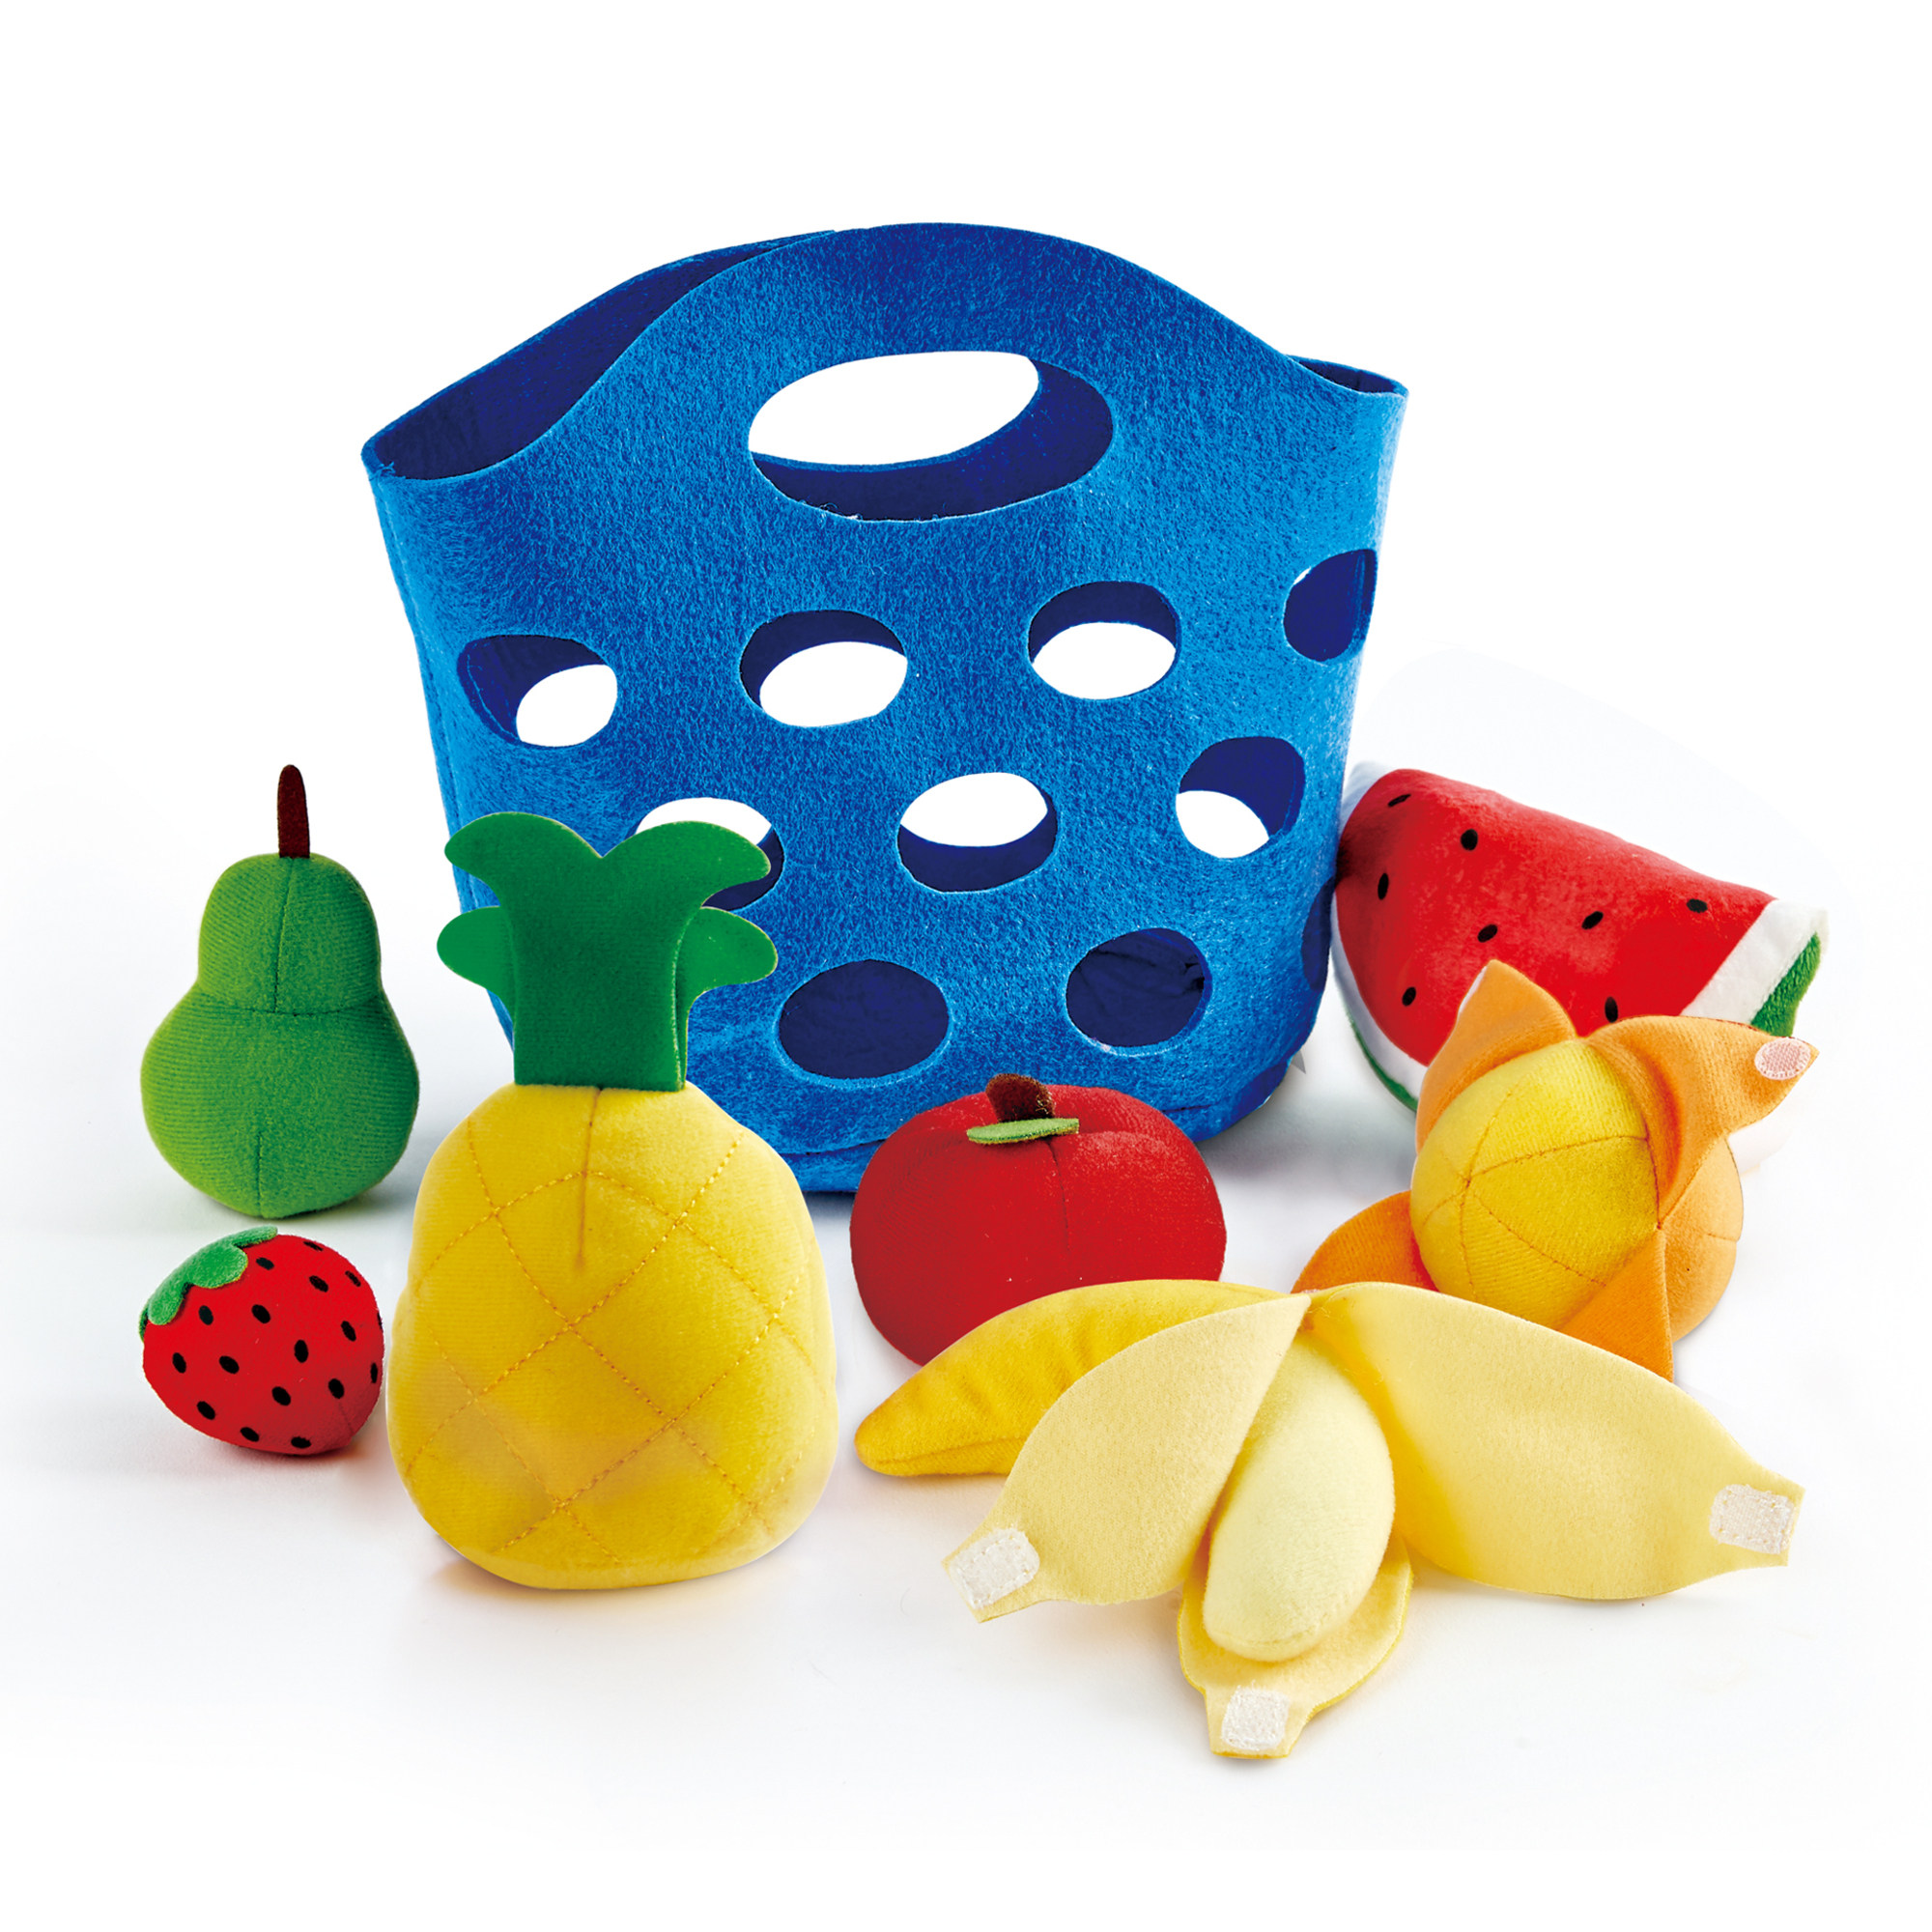 Hape Kitchen Fruit Basket Food Playset, 8 Pieces - image 1 of 5